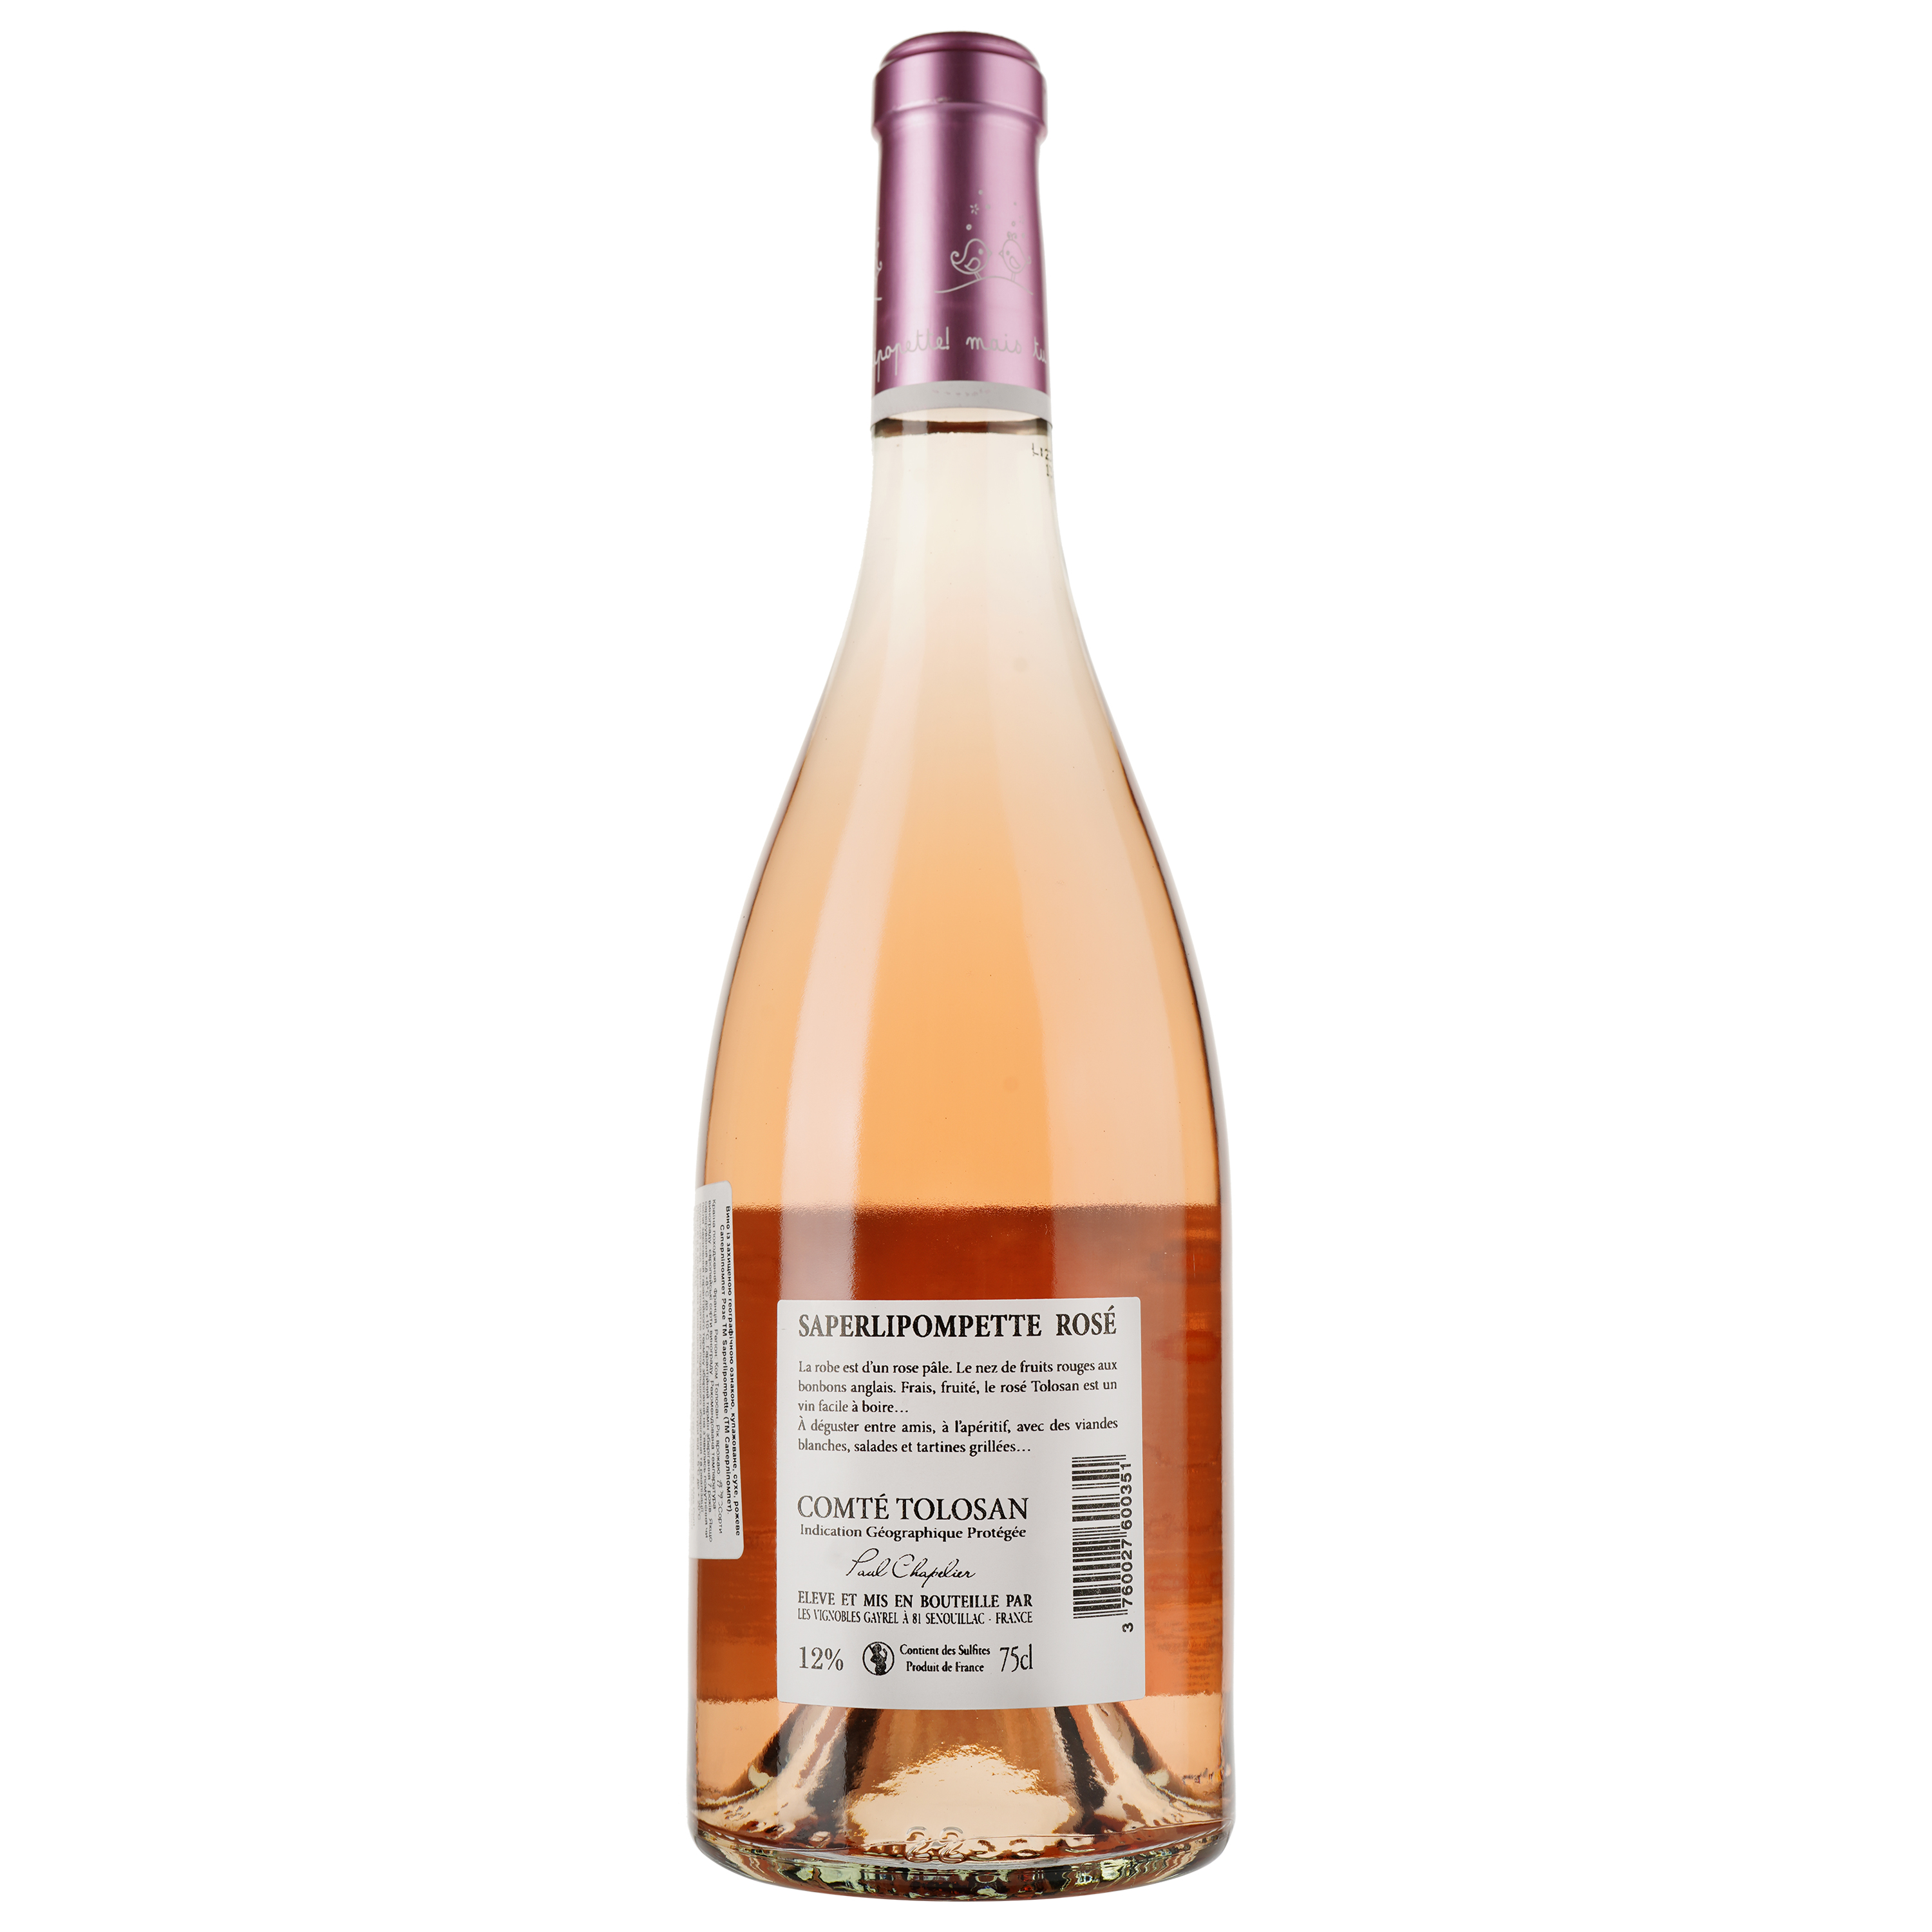 Вино Saperlipompette Rose IGP Comte Tolosan, розовое, сухое 0,75 л - фото 2